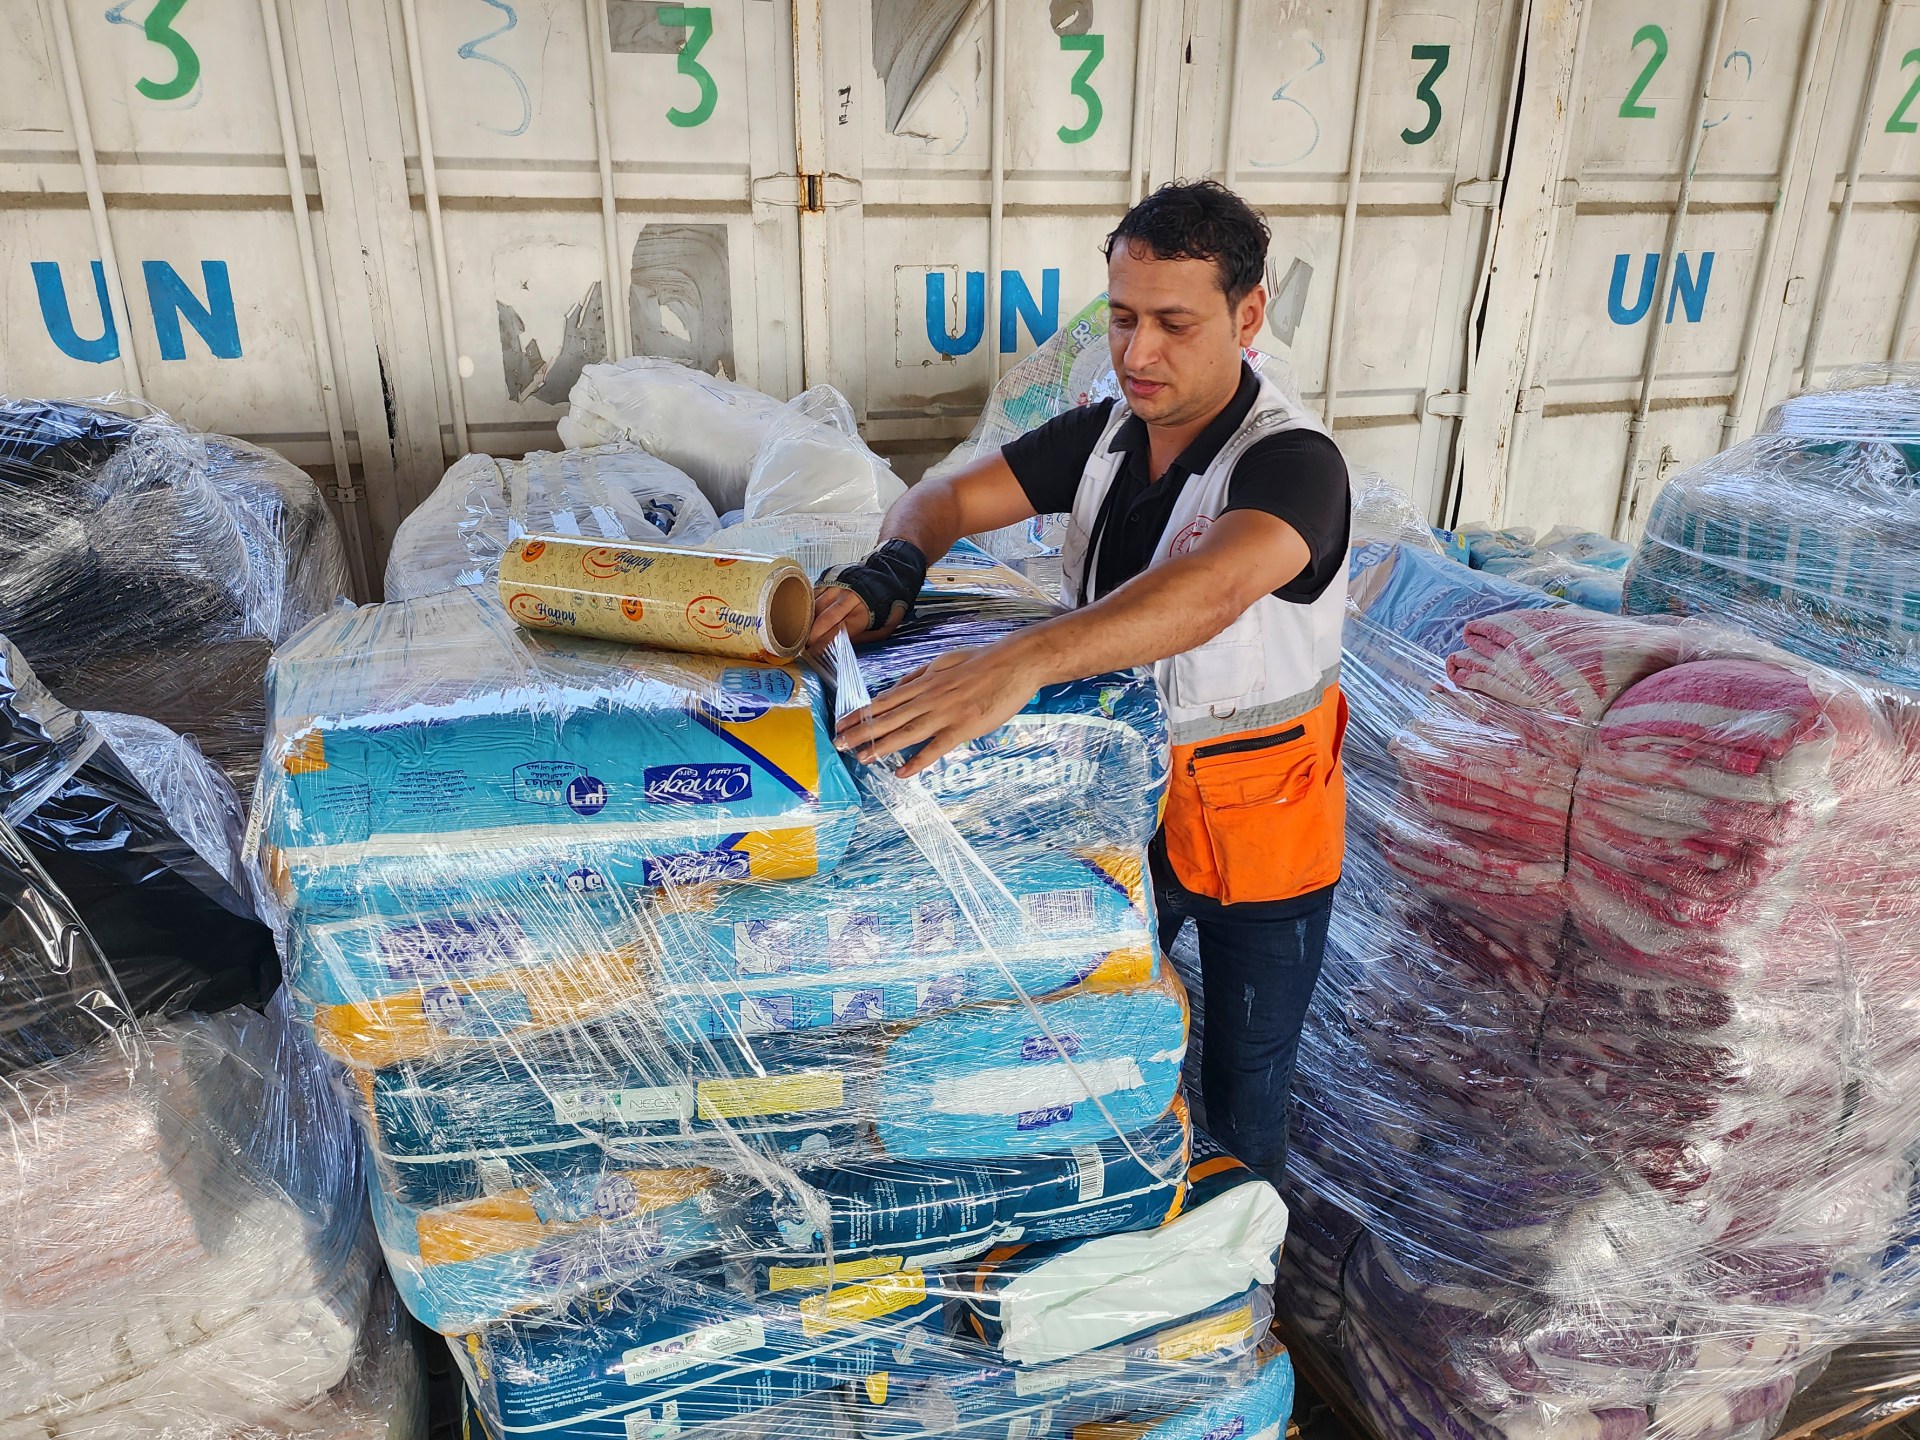 Palestinians break into Gaza UN aid warehouses in a sign of desperation